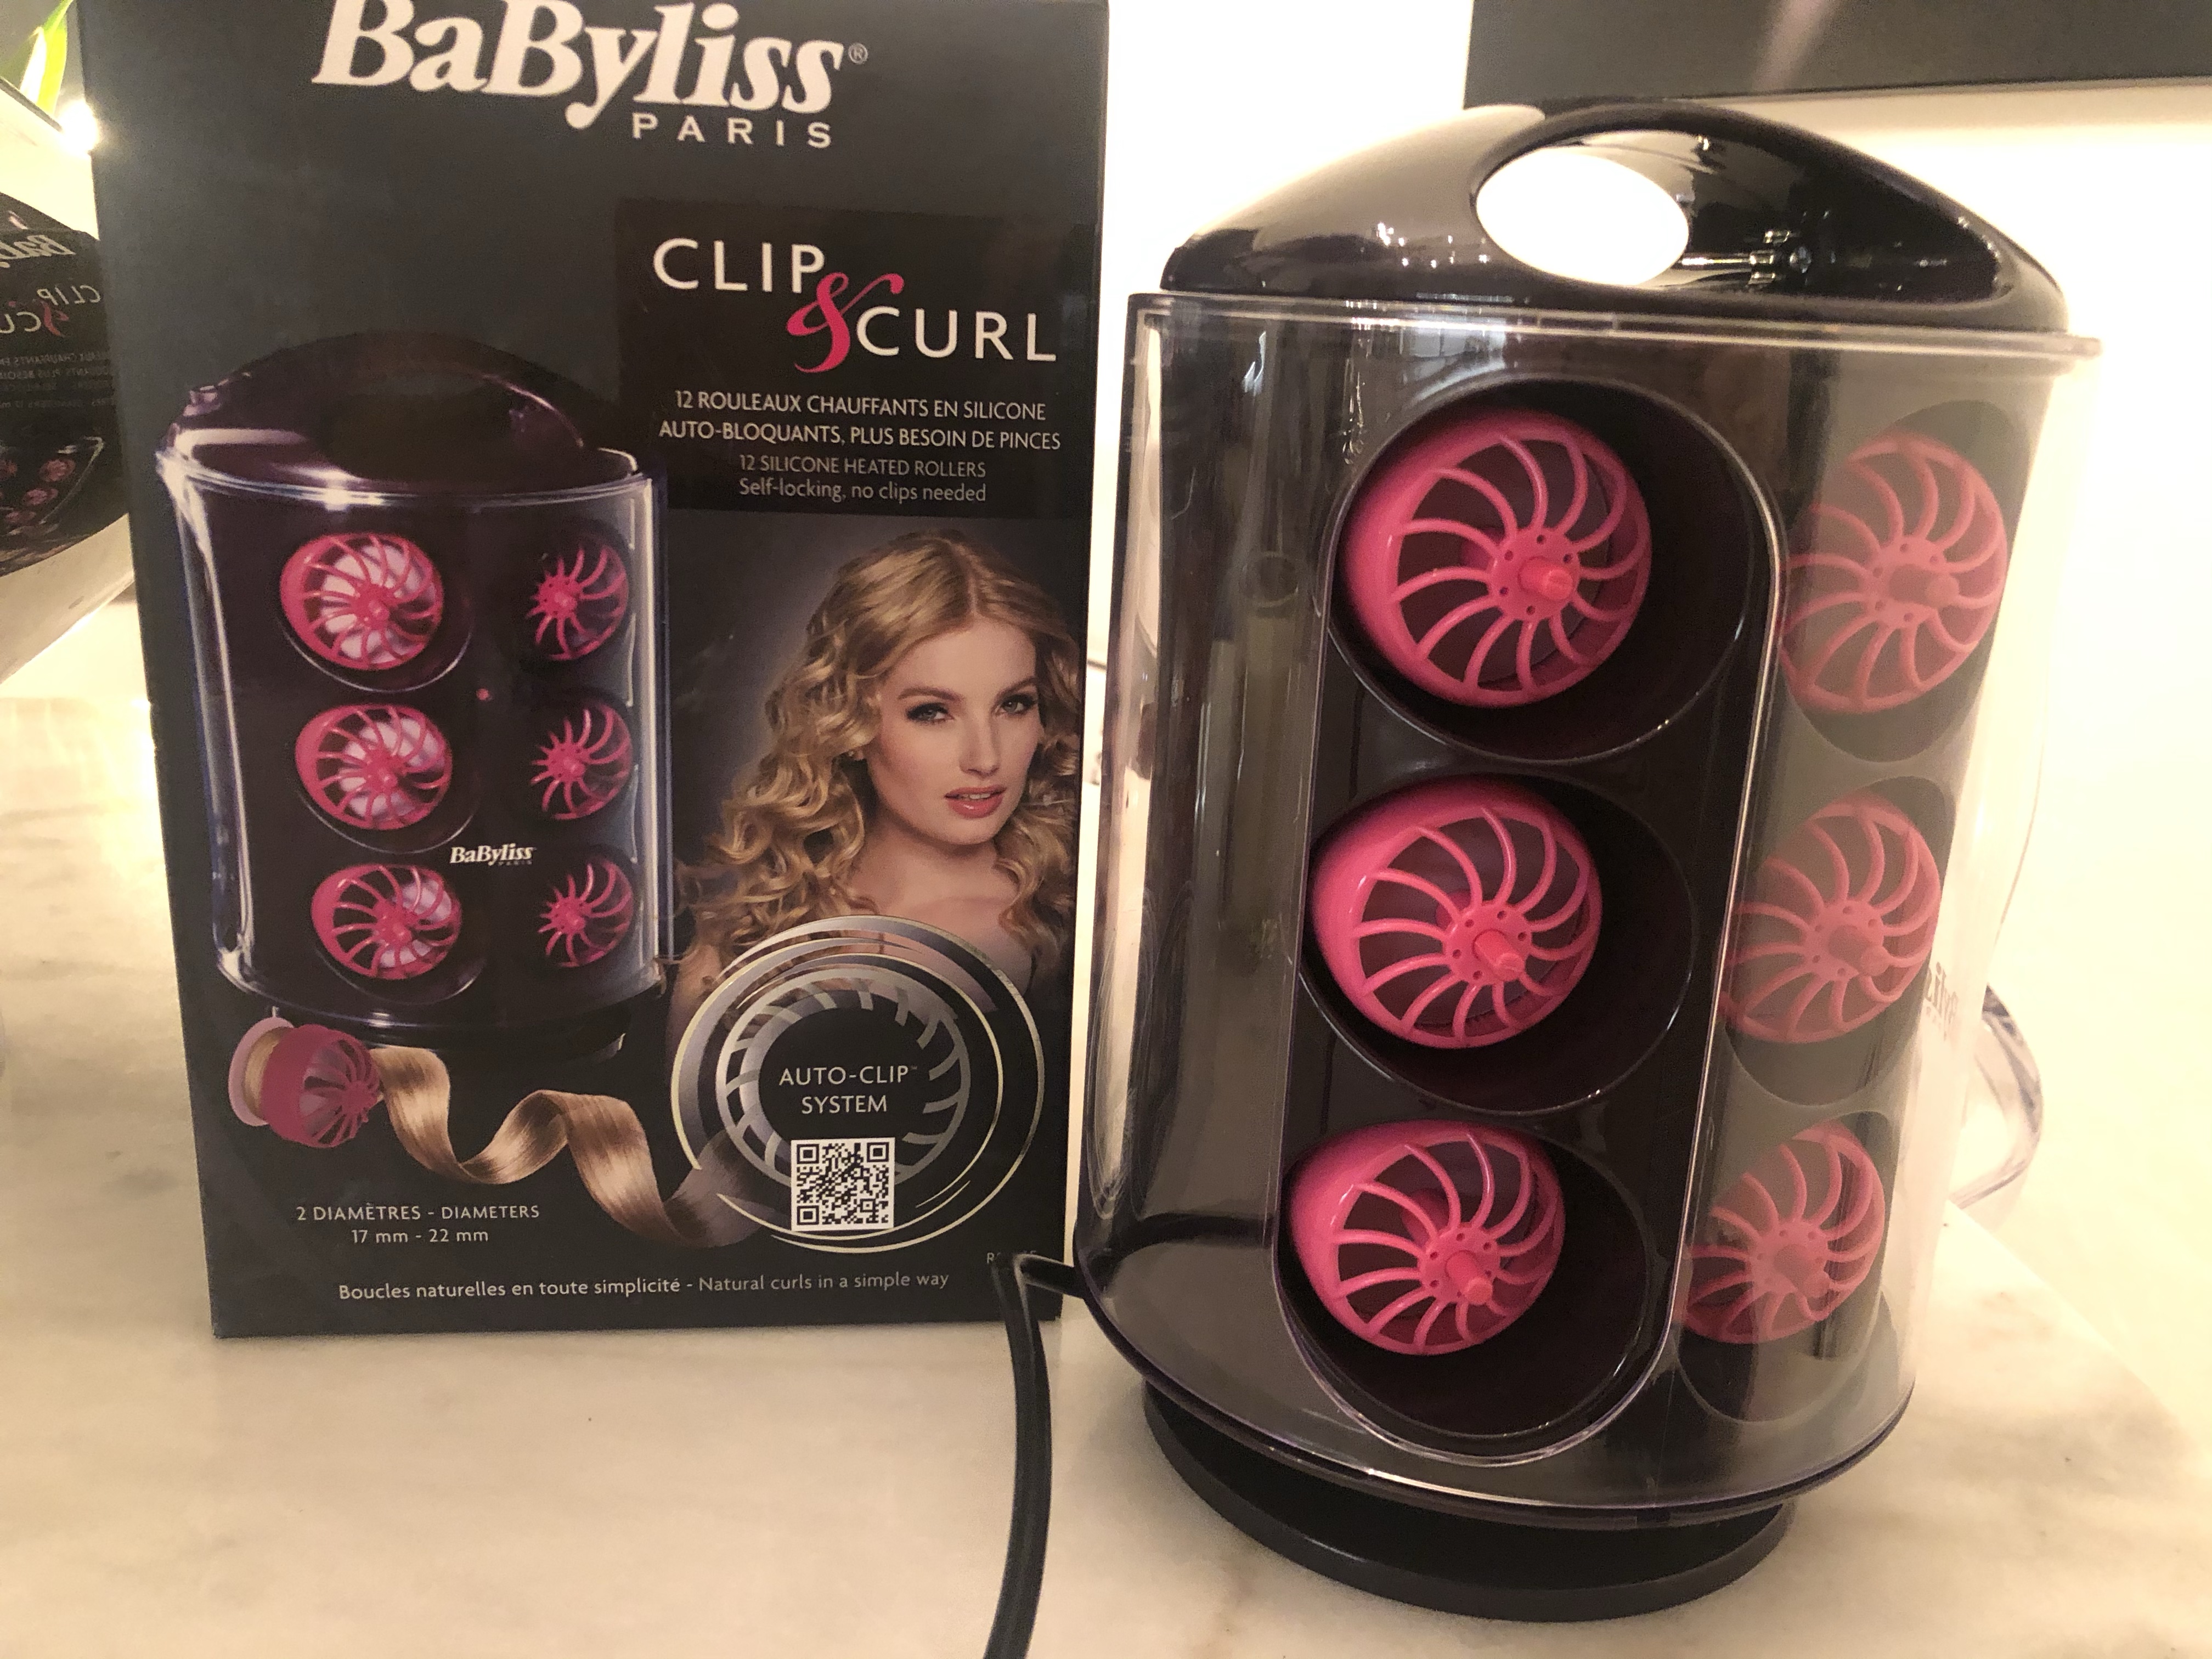 Babyliss Clip & Curl VS Babyliss Mira Curl 